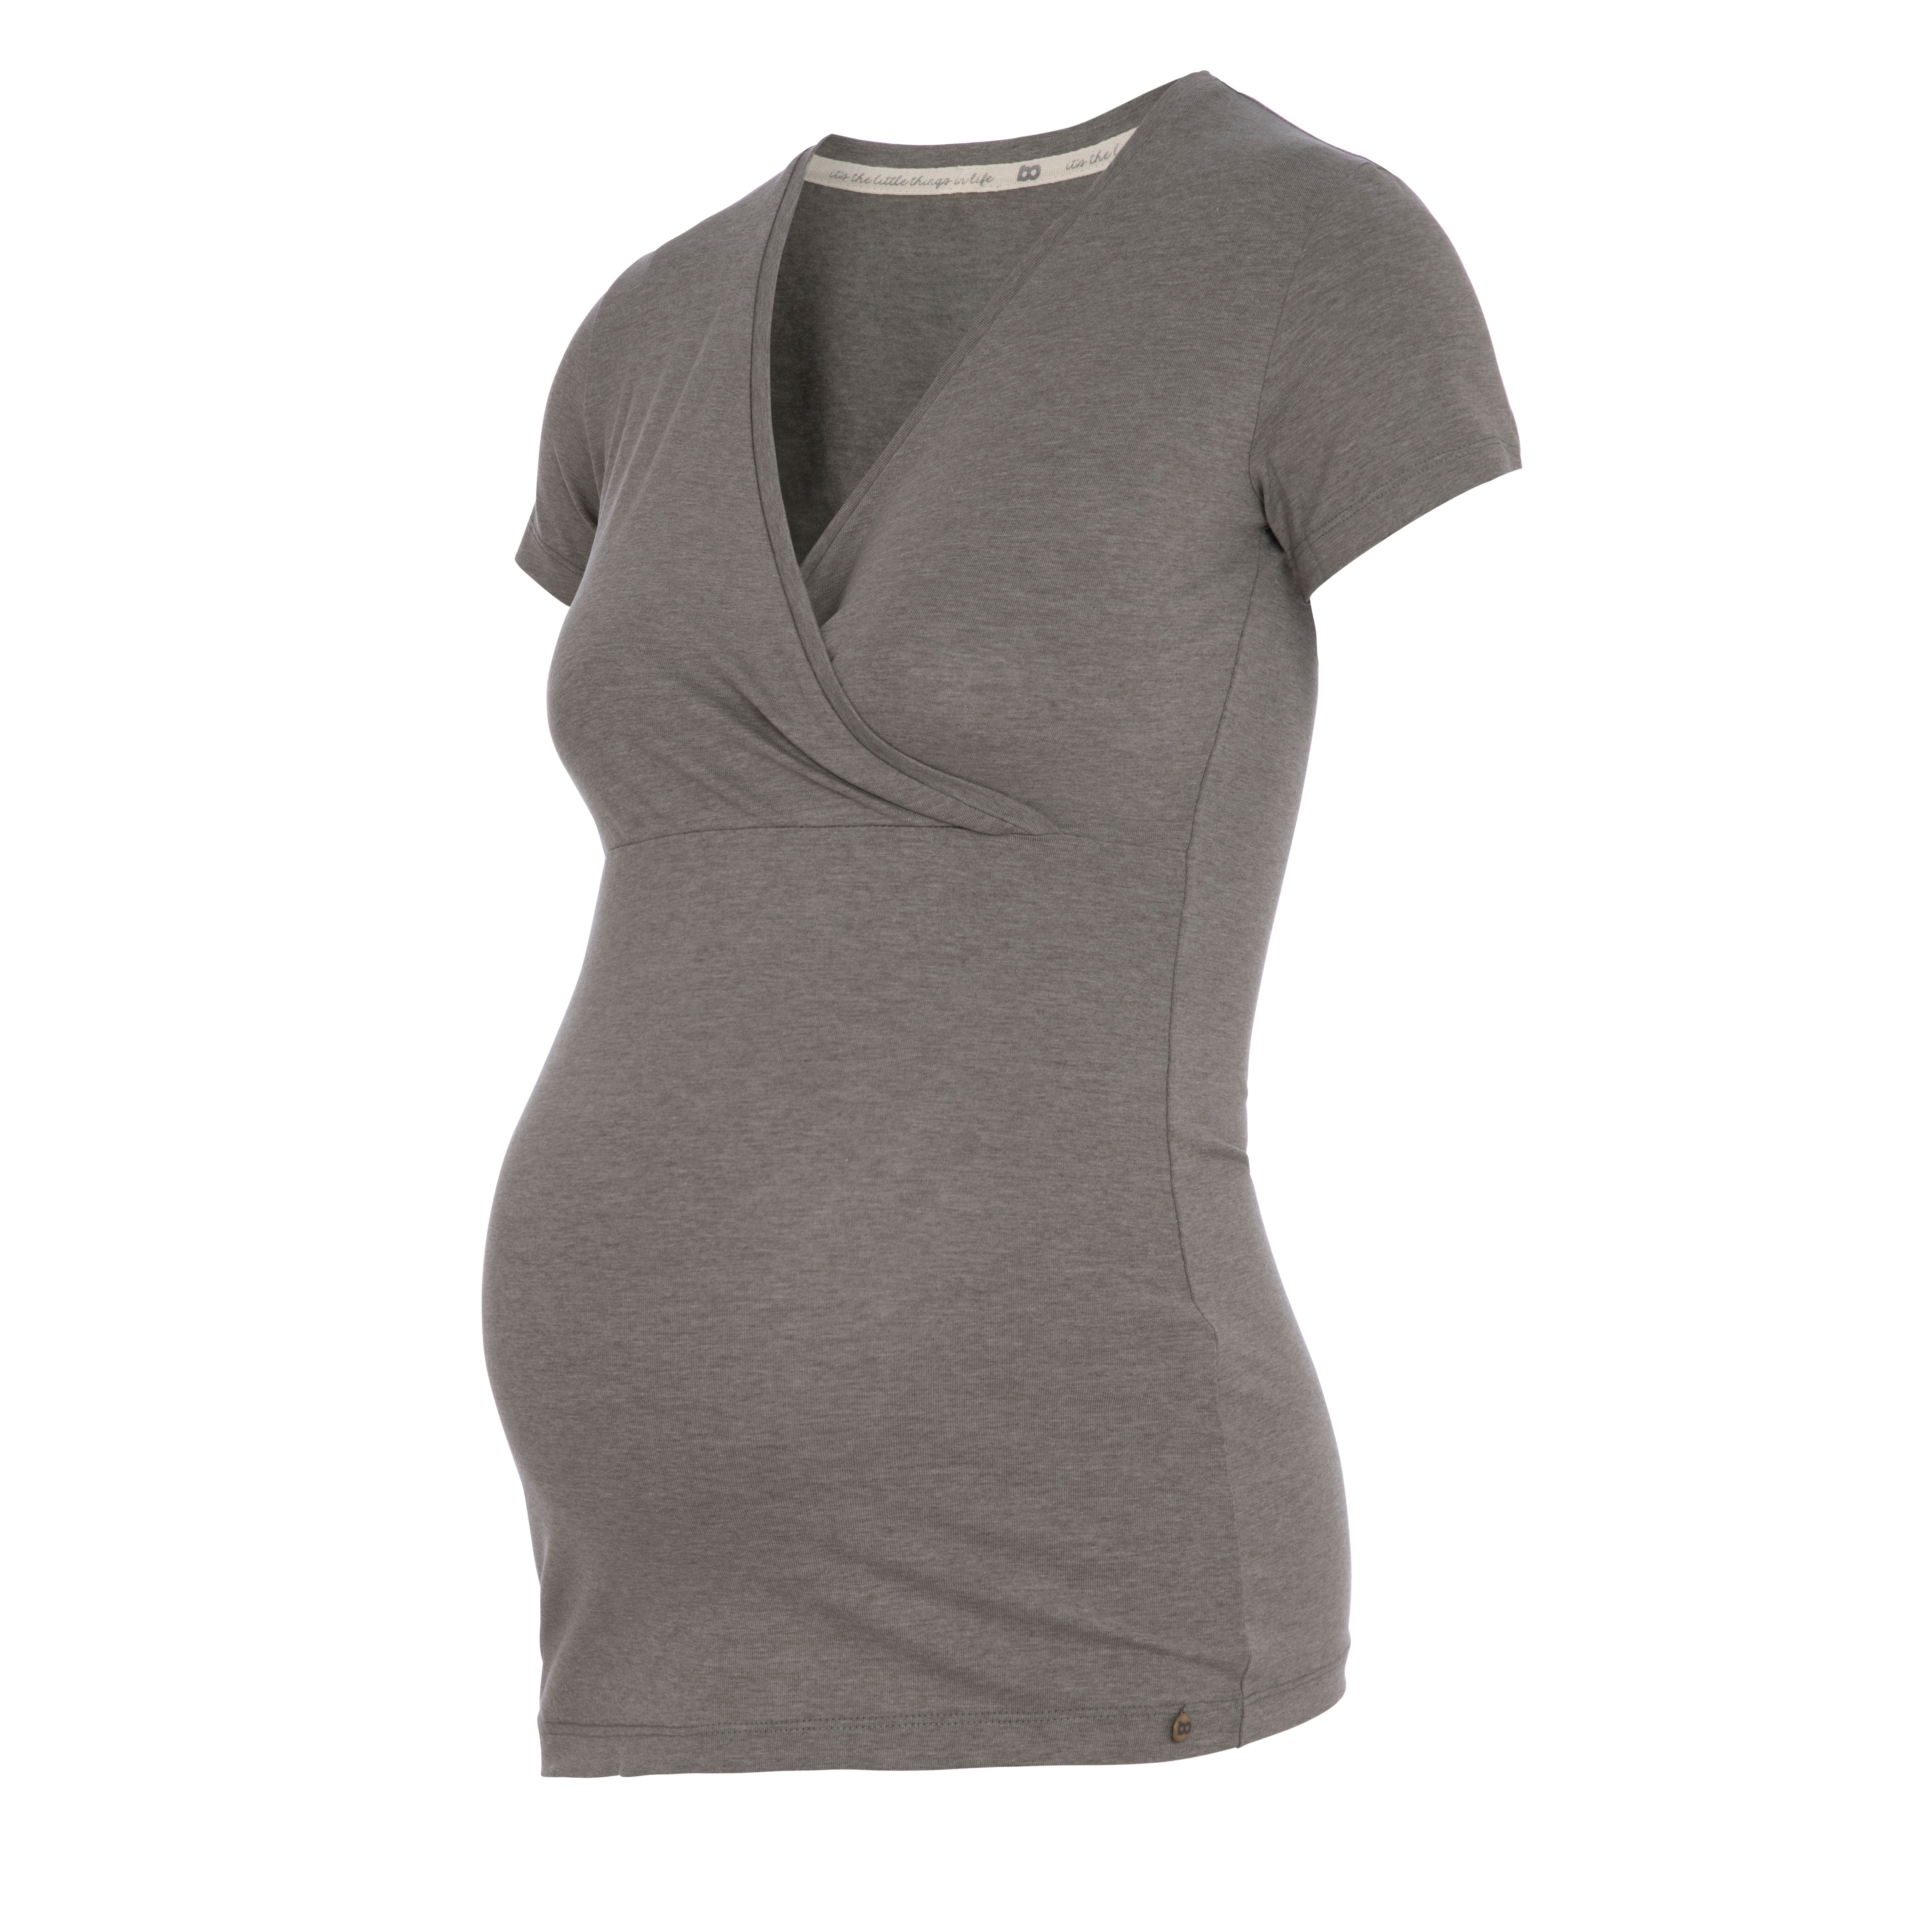 Maternity T-shirt Glow hazel brown - S - With nursing function